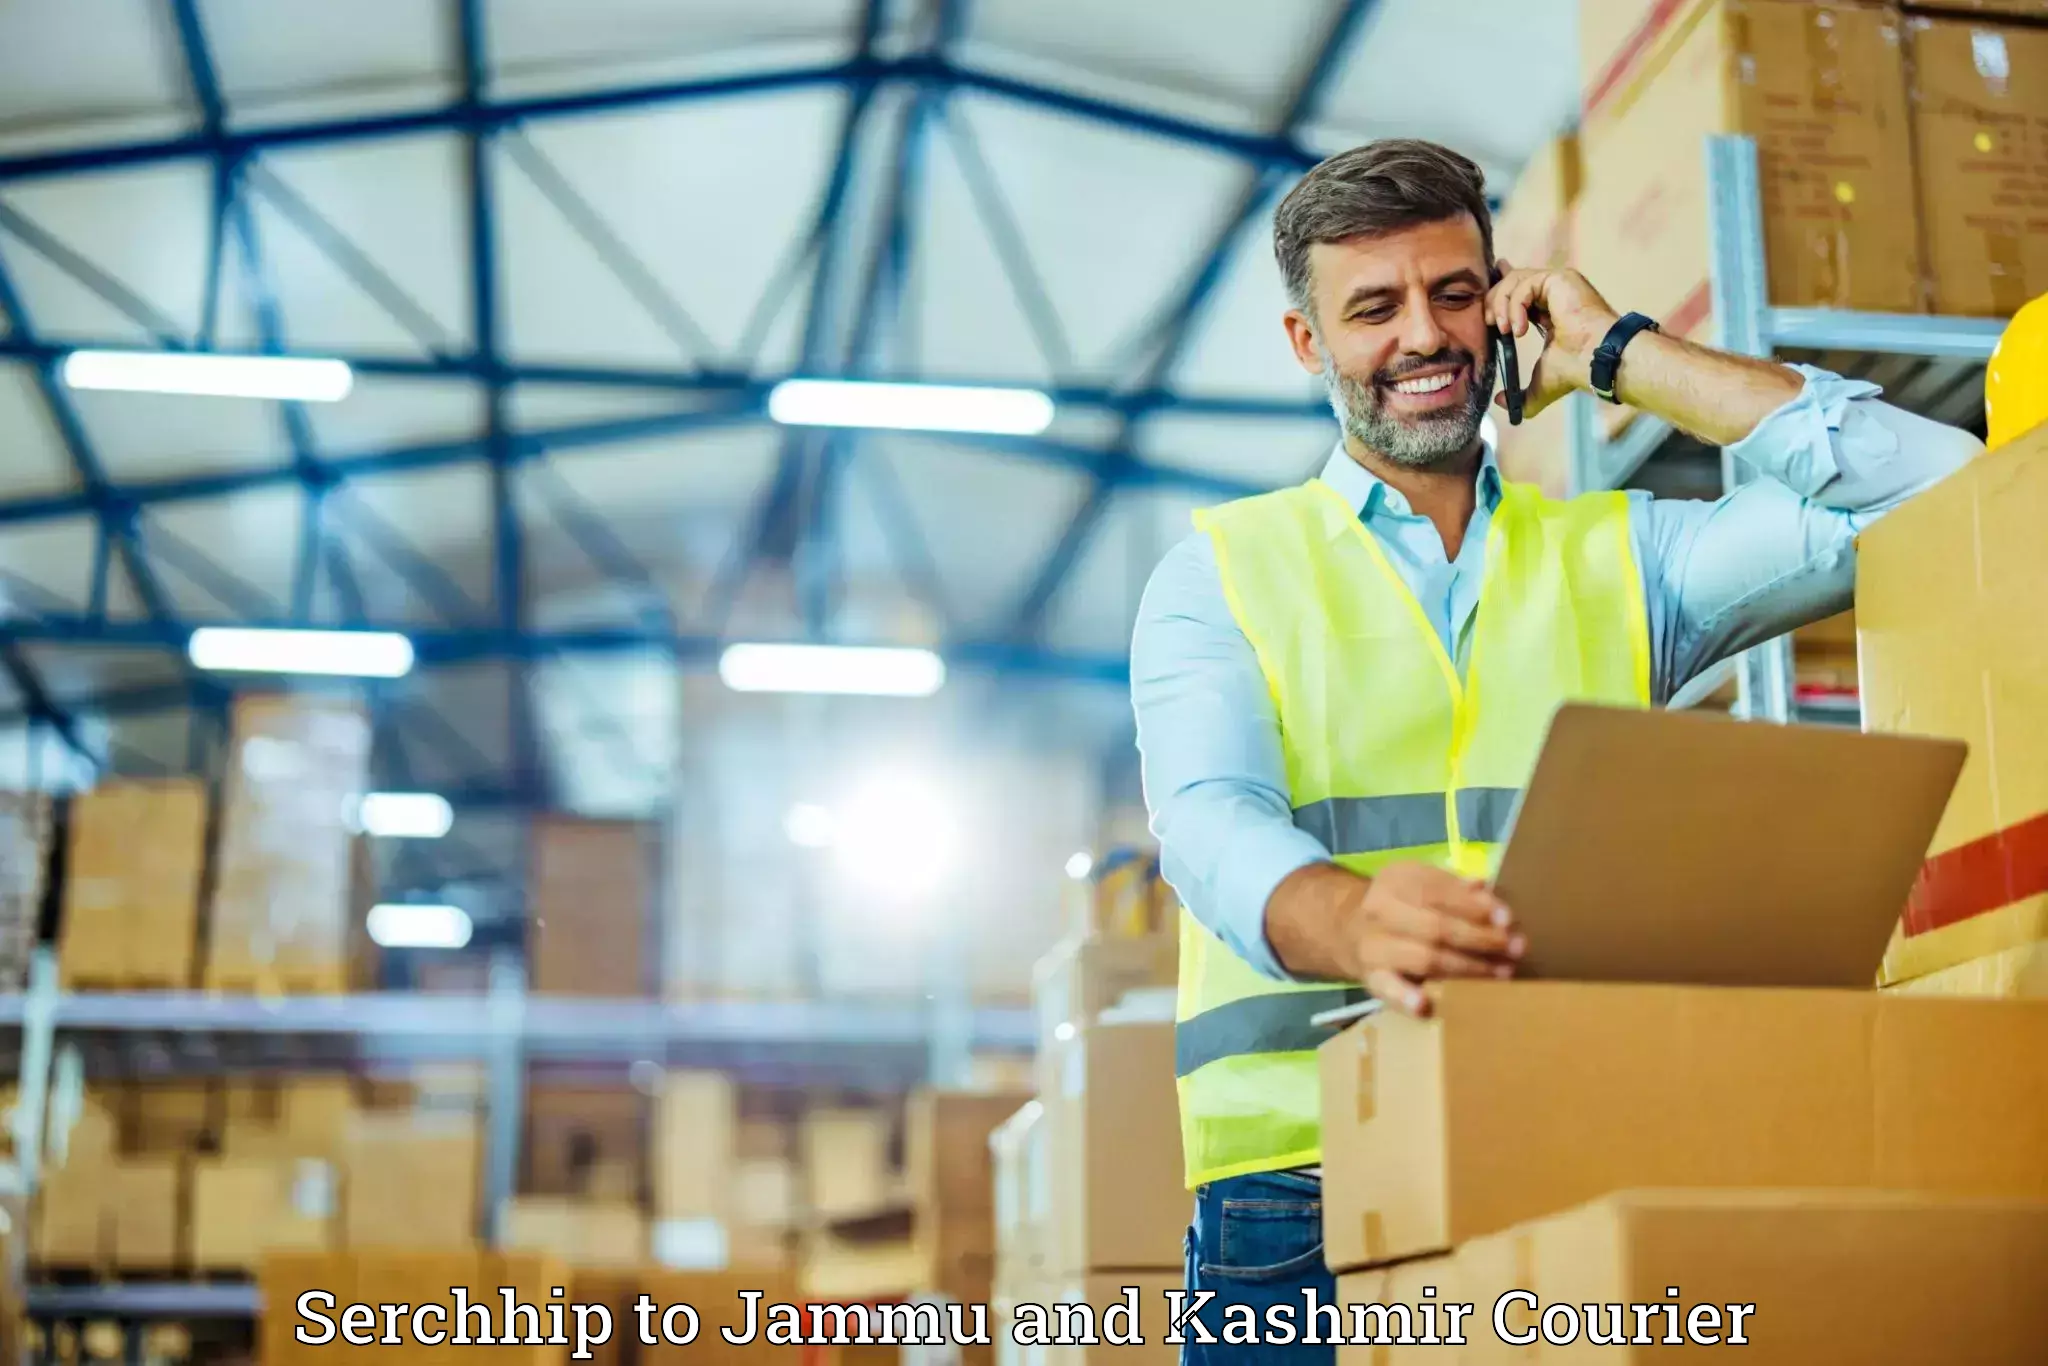 Efficient moving company Serchhip to Jammu